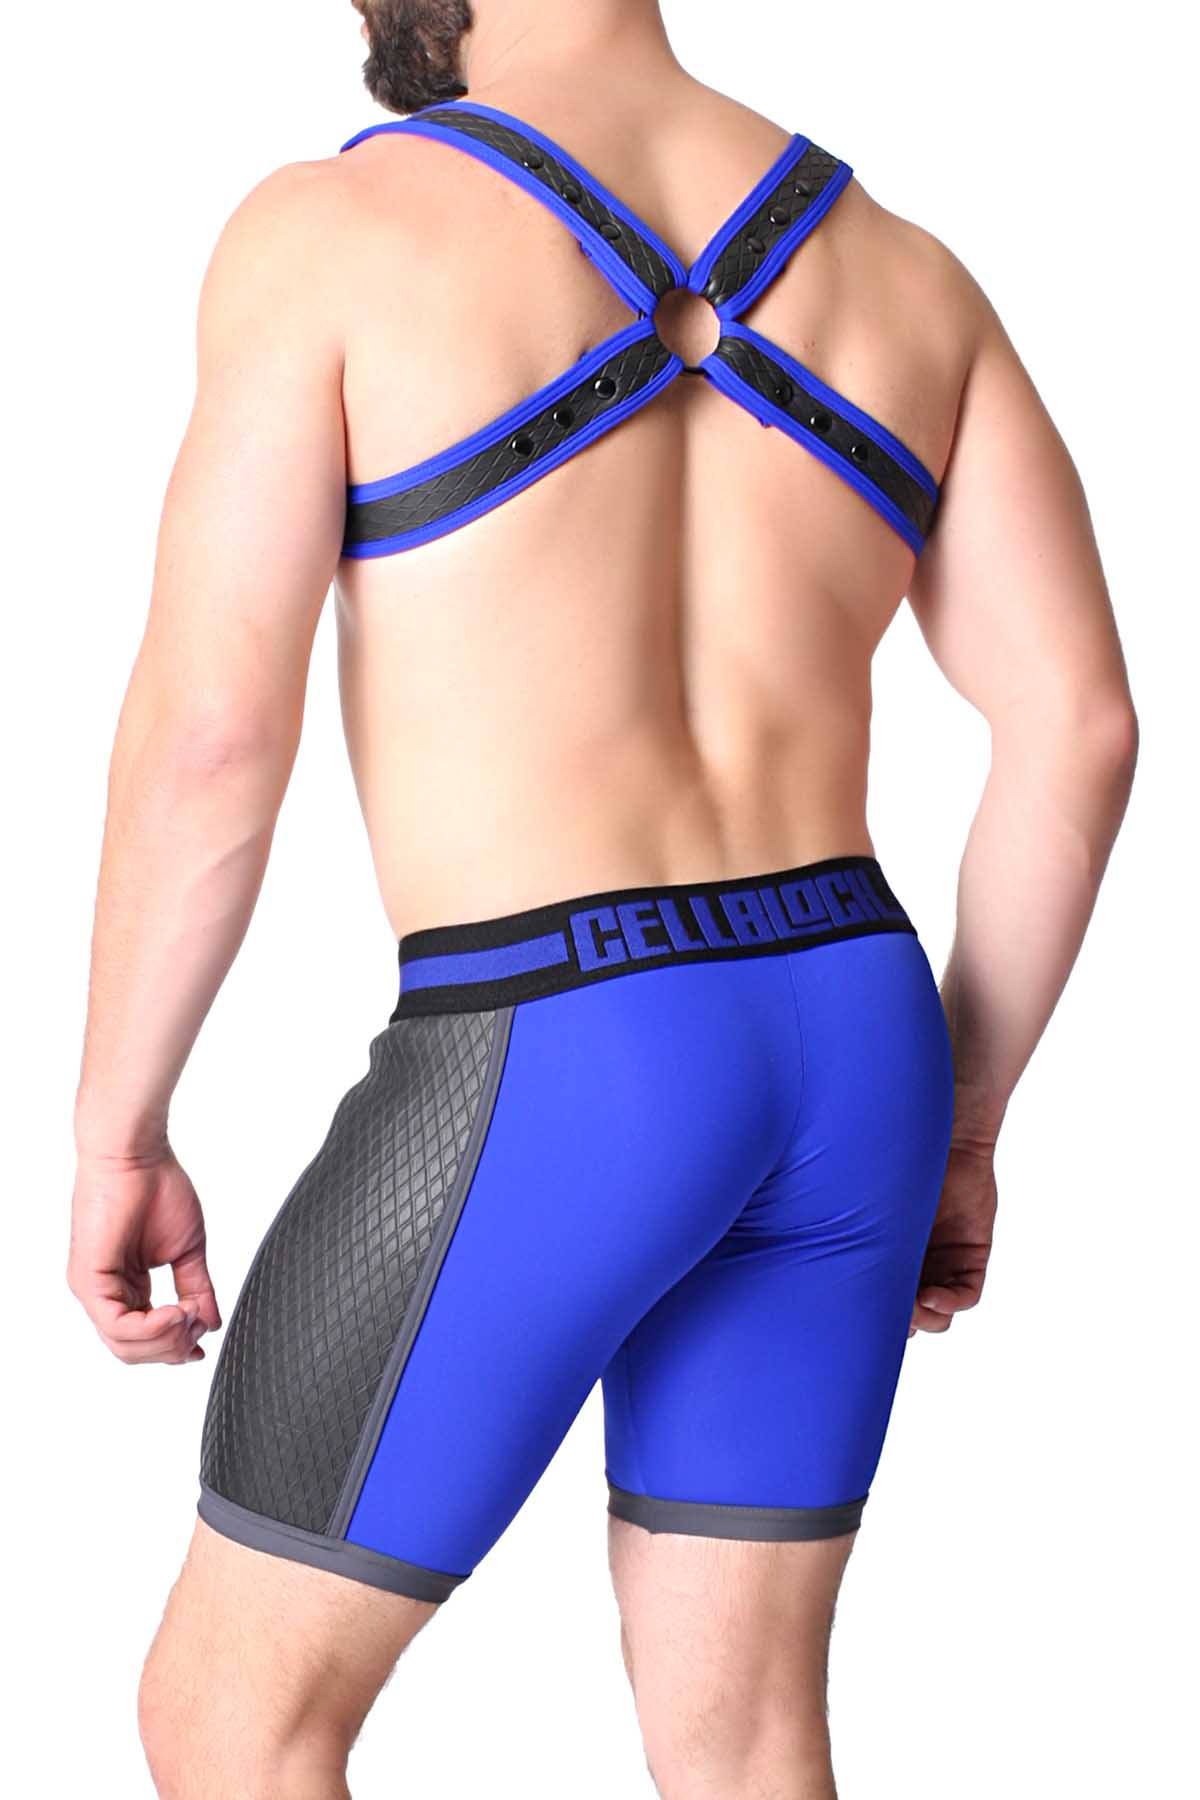 CellBlock 13 Blue Gridiron Pocket Harness